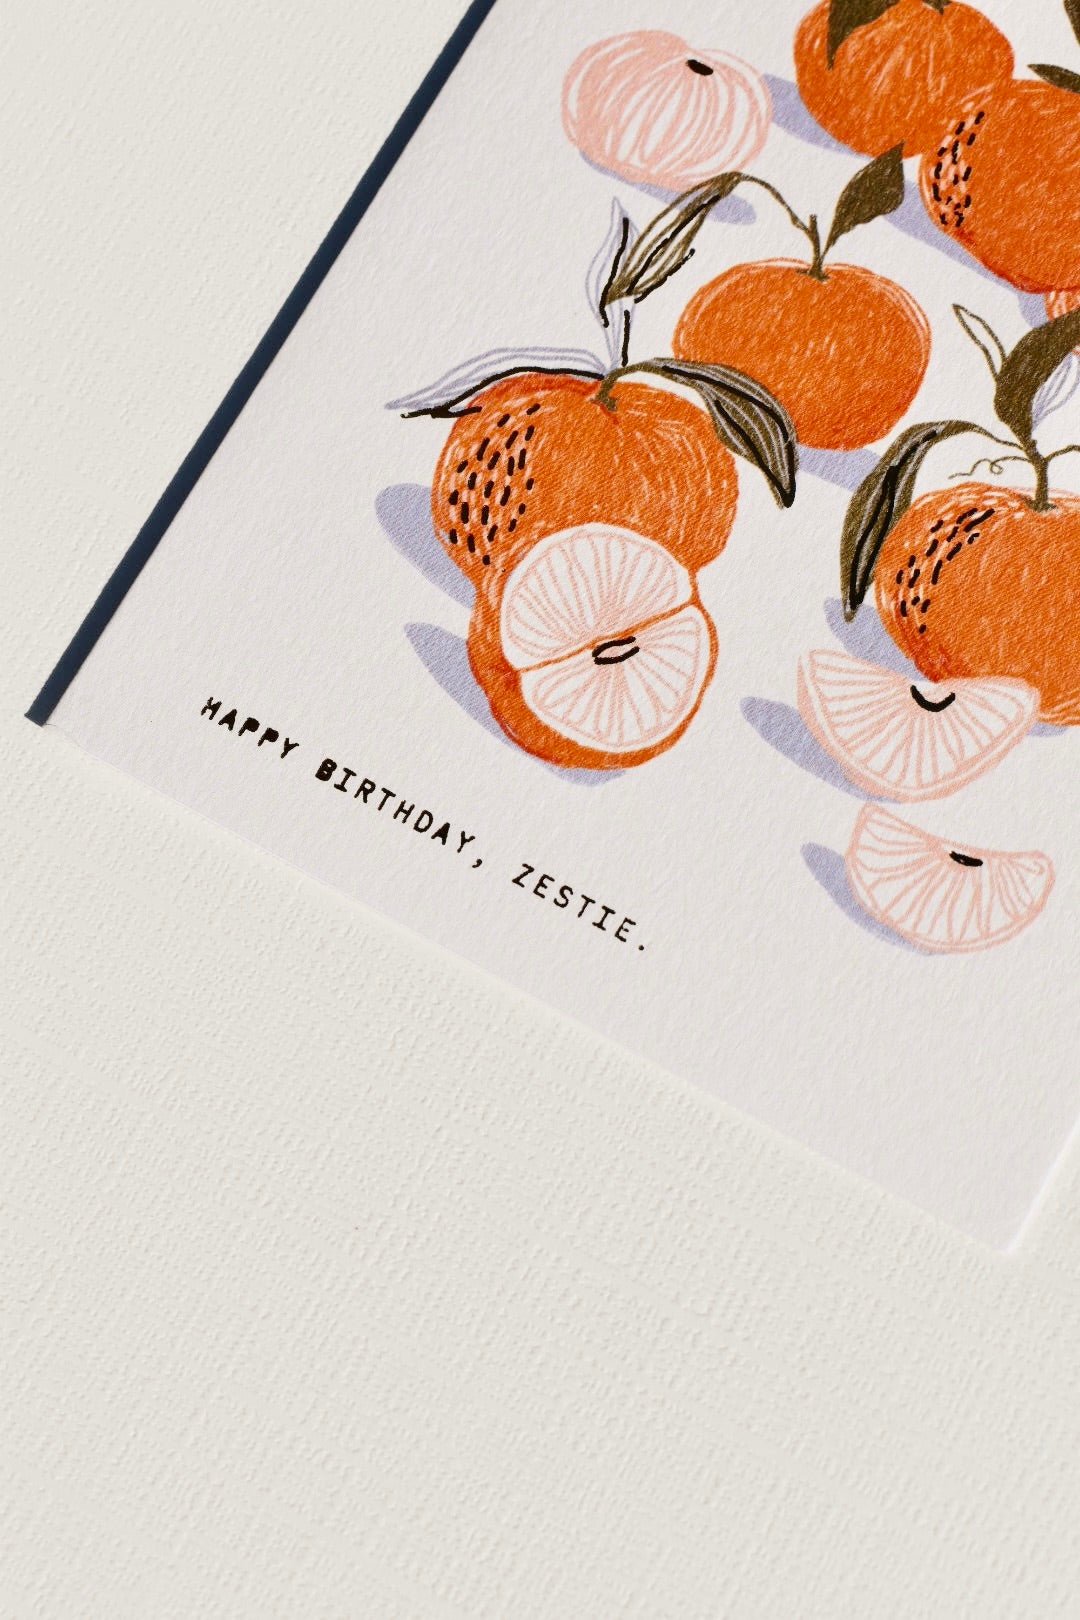 Zestie Birthday Card - Ardent Market - Someday Studio